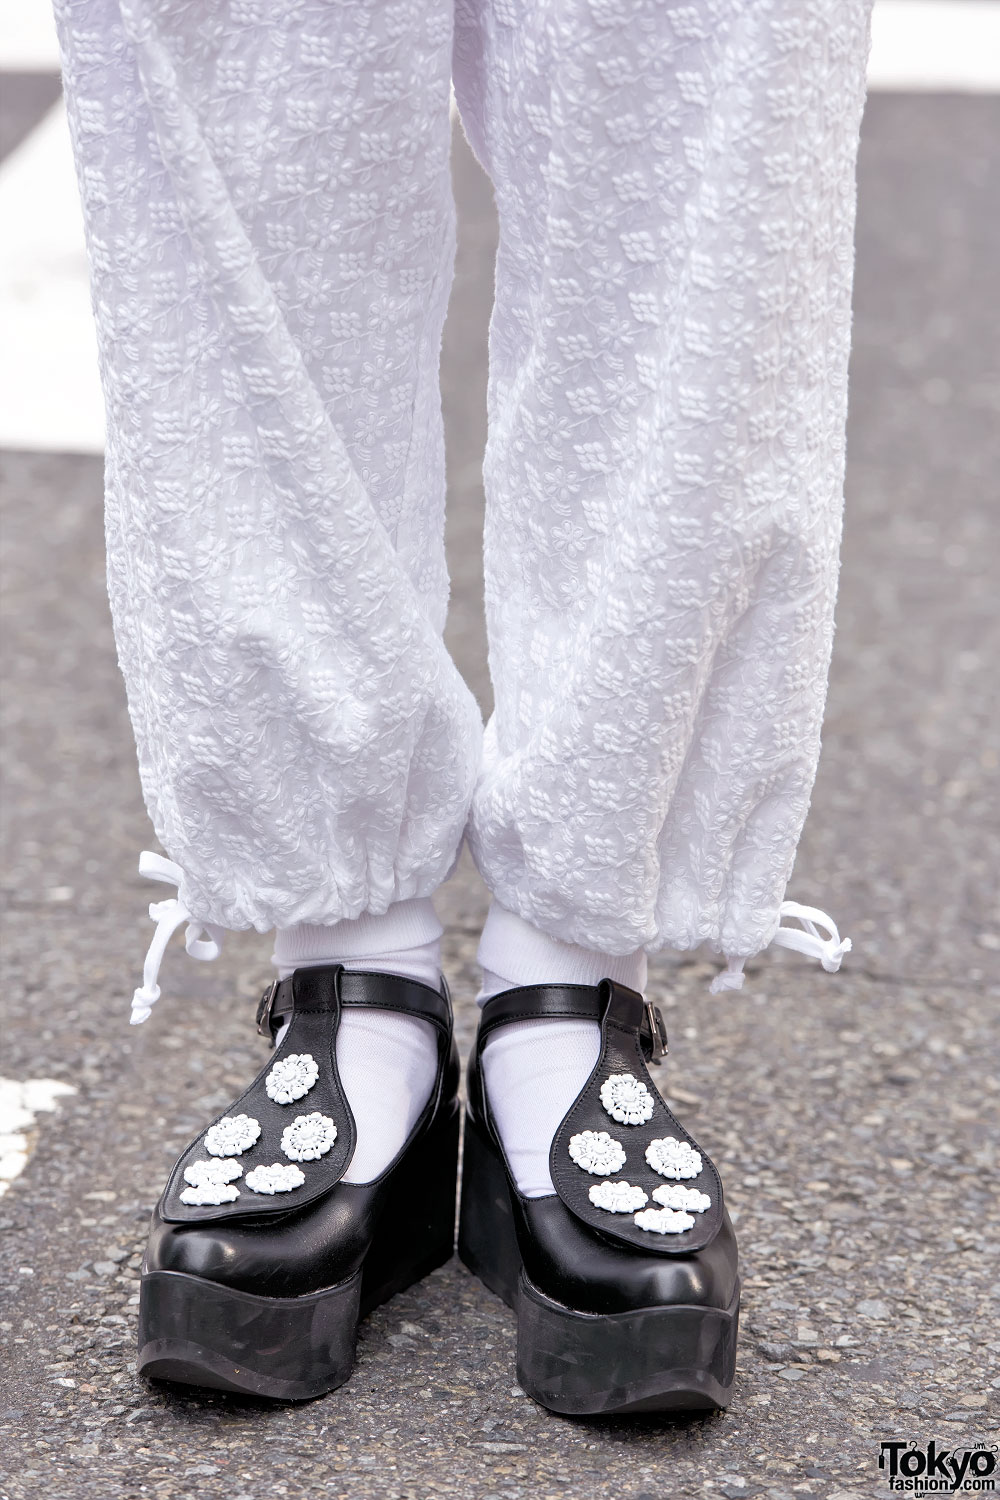 Harajuku Girl in tricot COMME des GARCONS, Tokyo Bopper & Vivienne Westwood